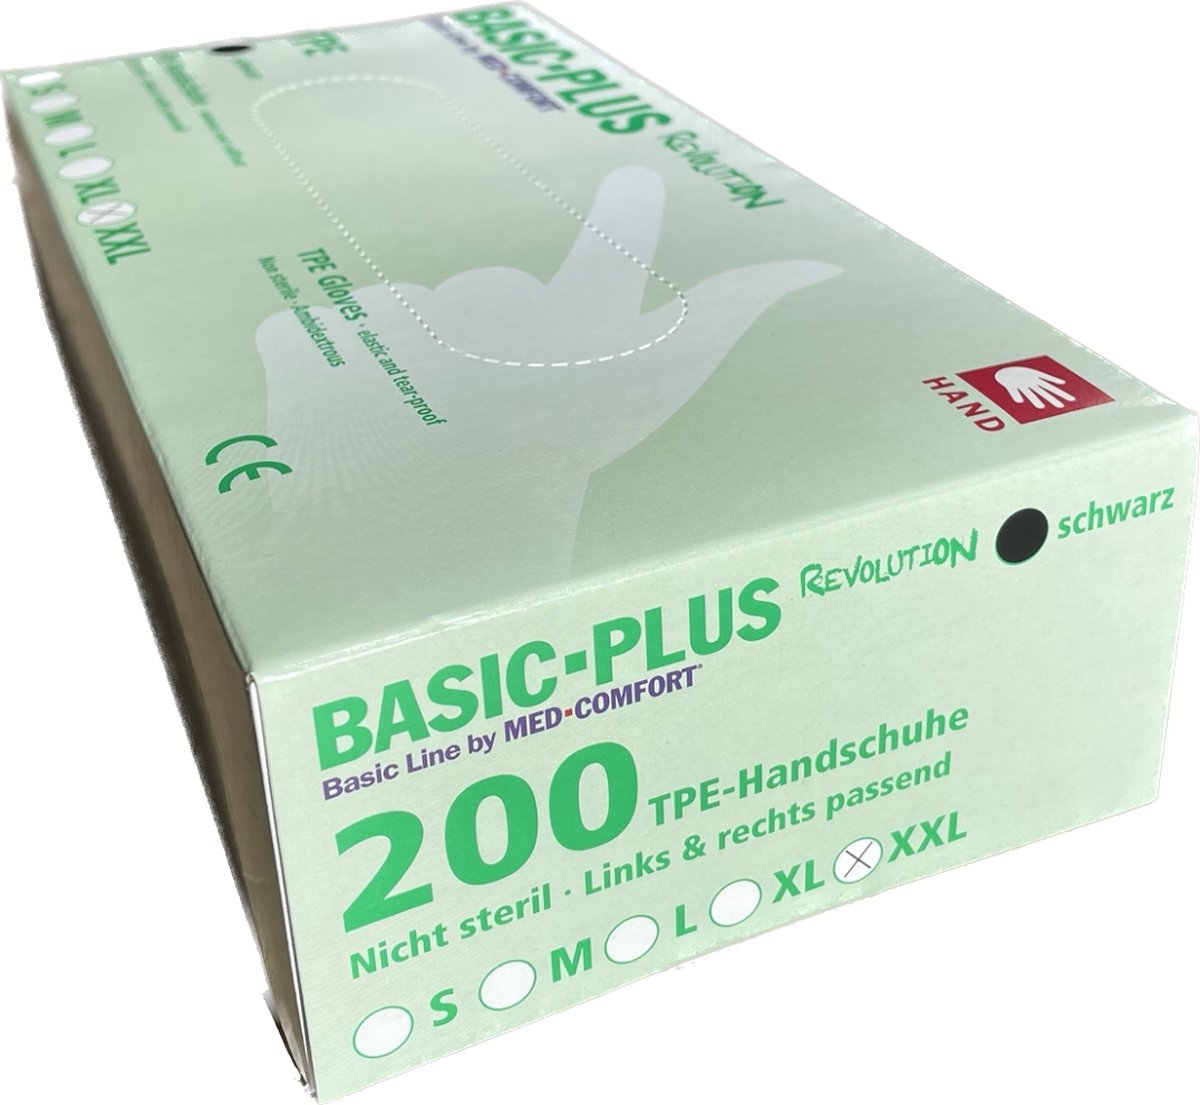 Basic Plus revolution - Med Comfort - TPE Handschoenen - Zwart - XXL - 200 stuks